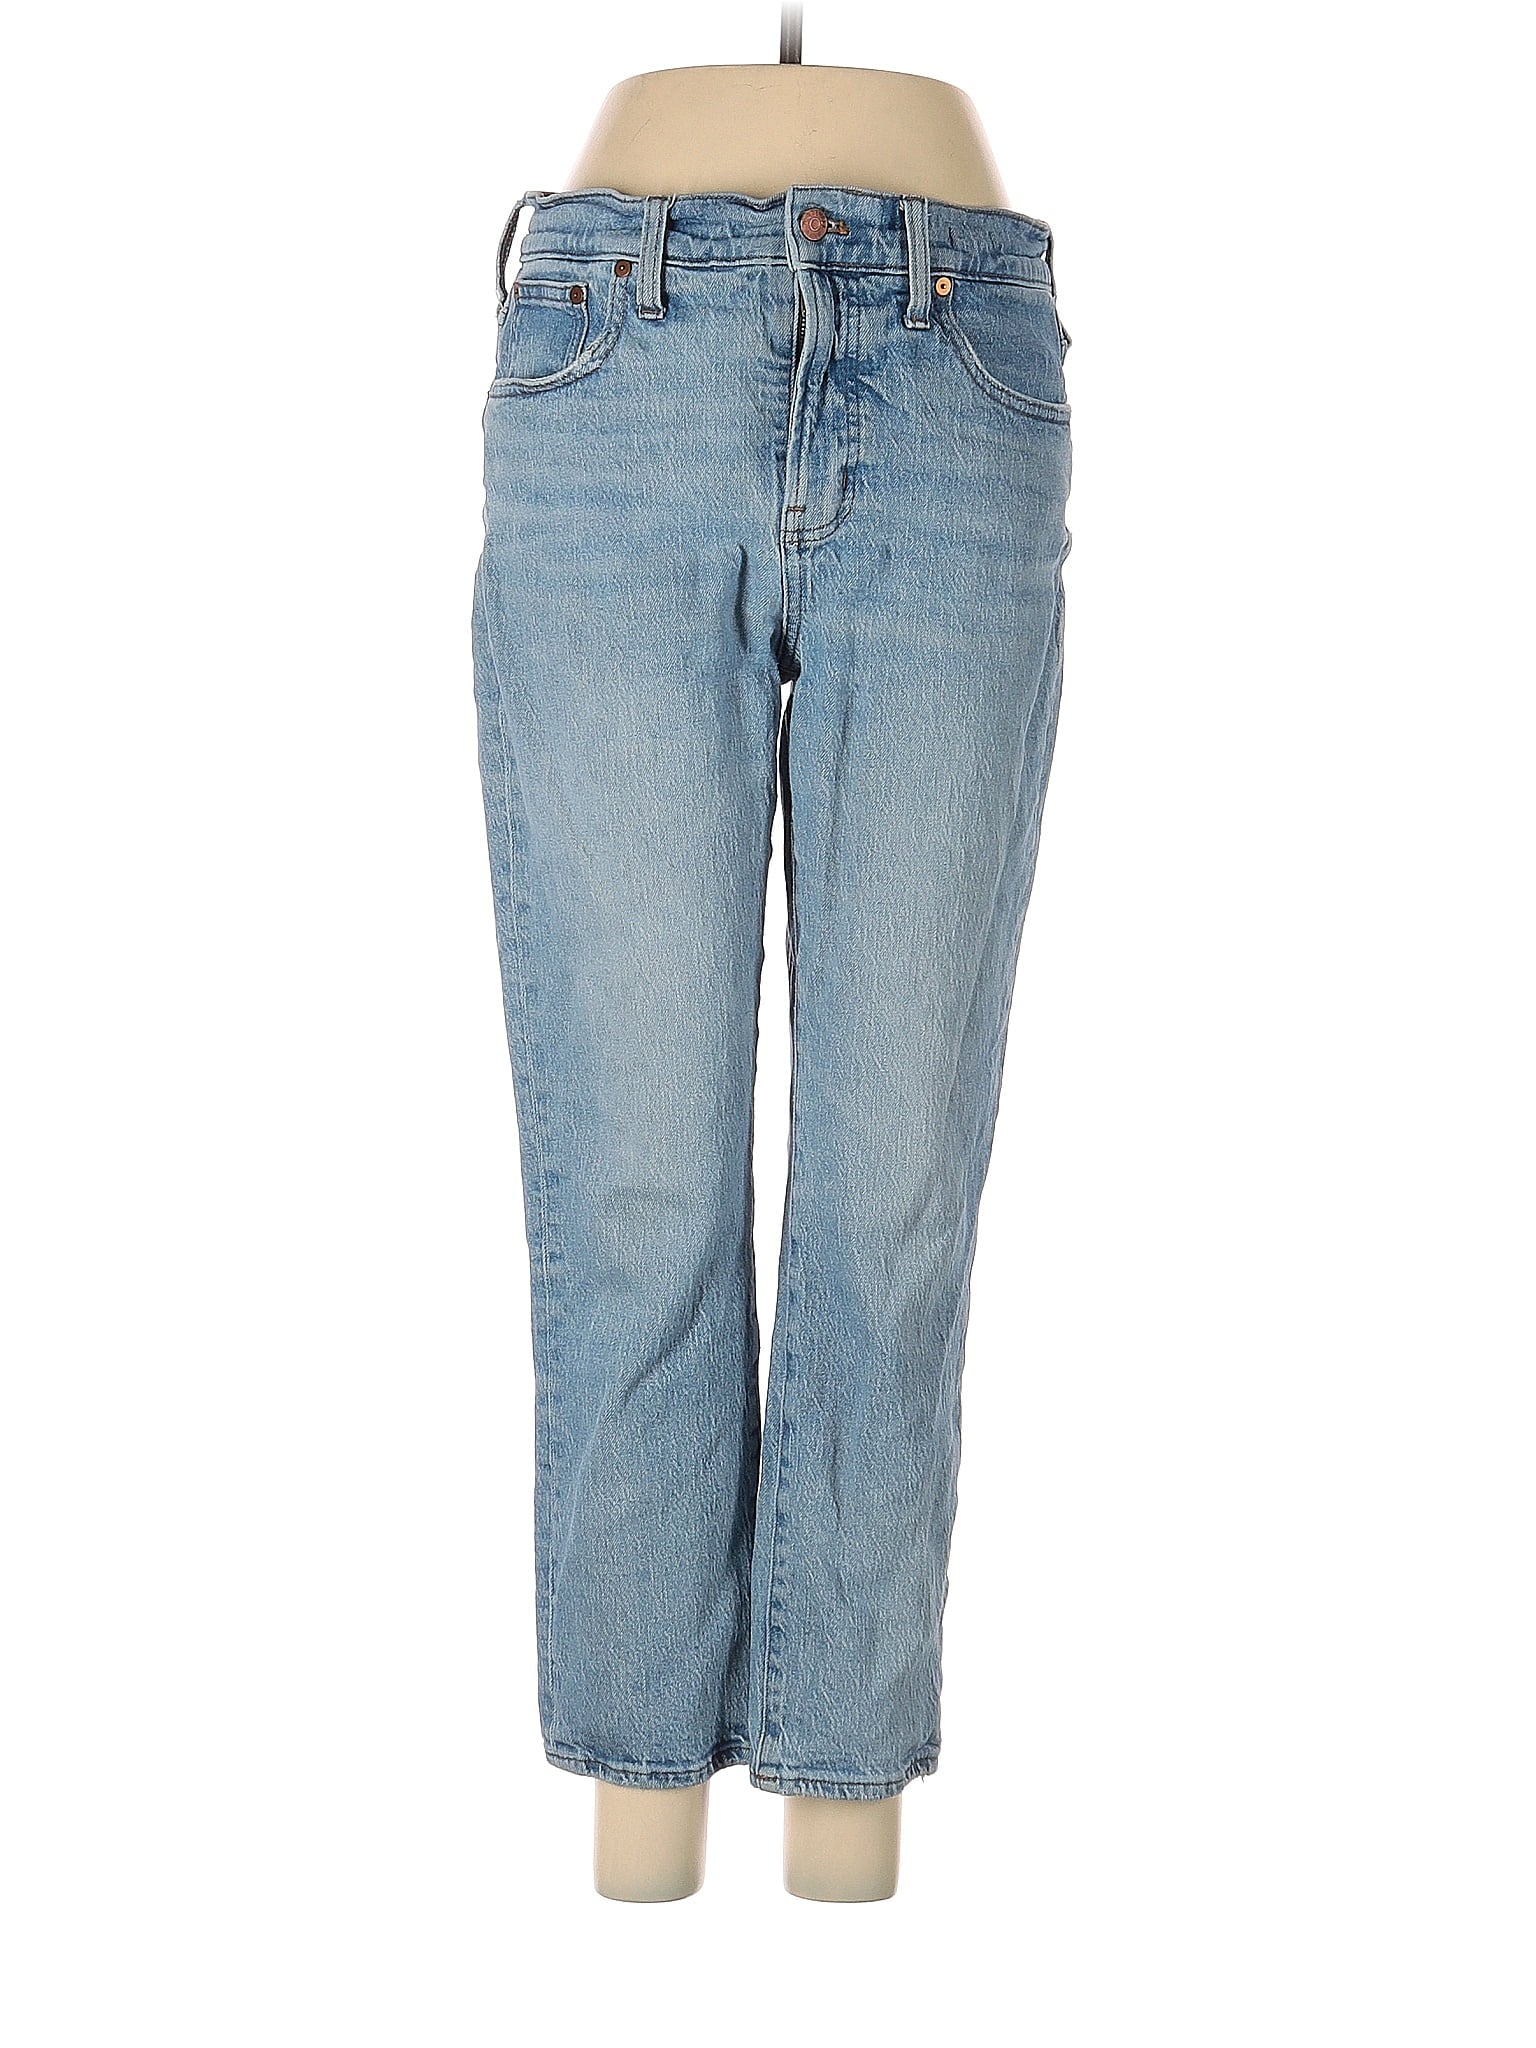 Mid-Rise Jeans waist size - 29